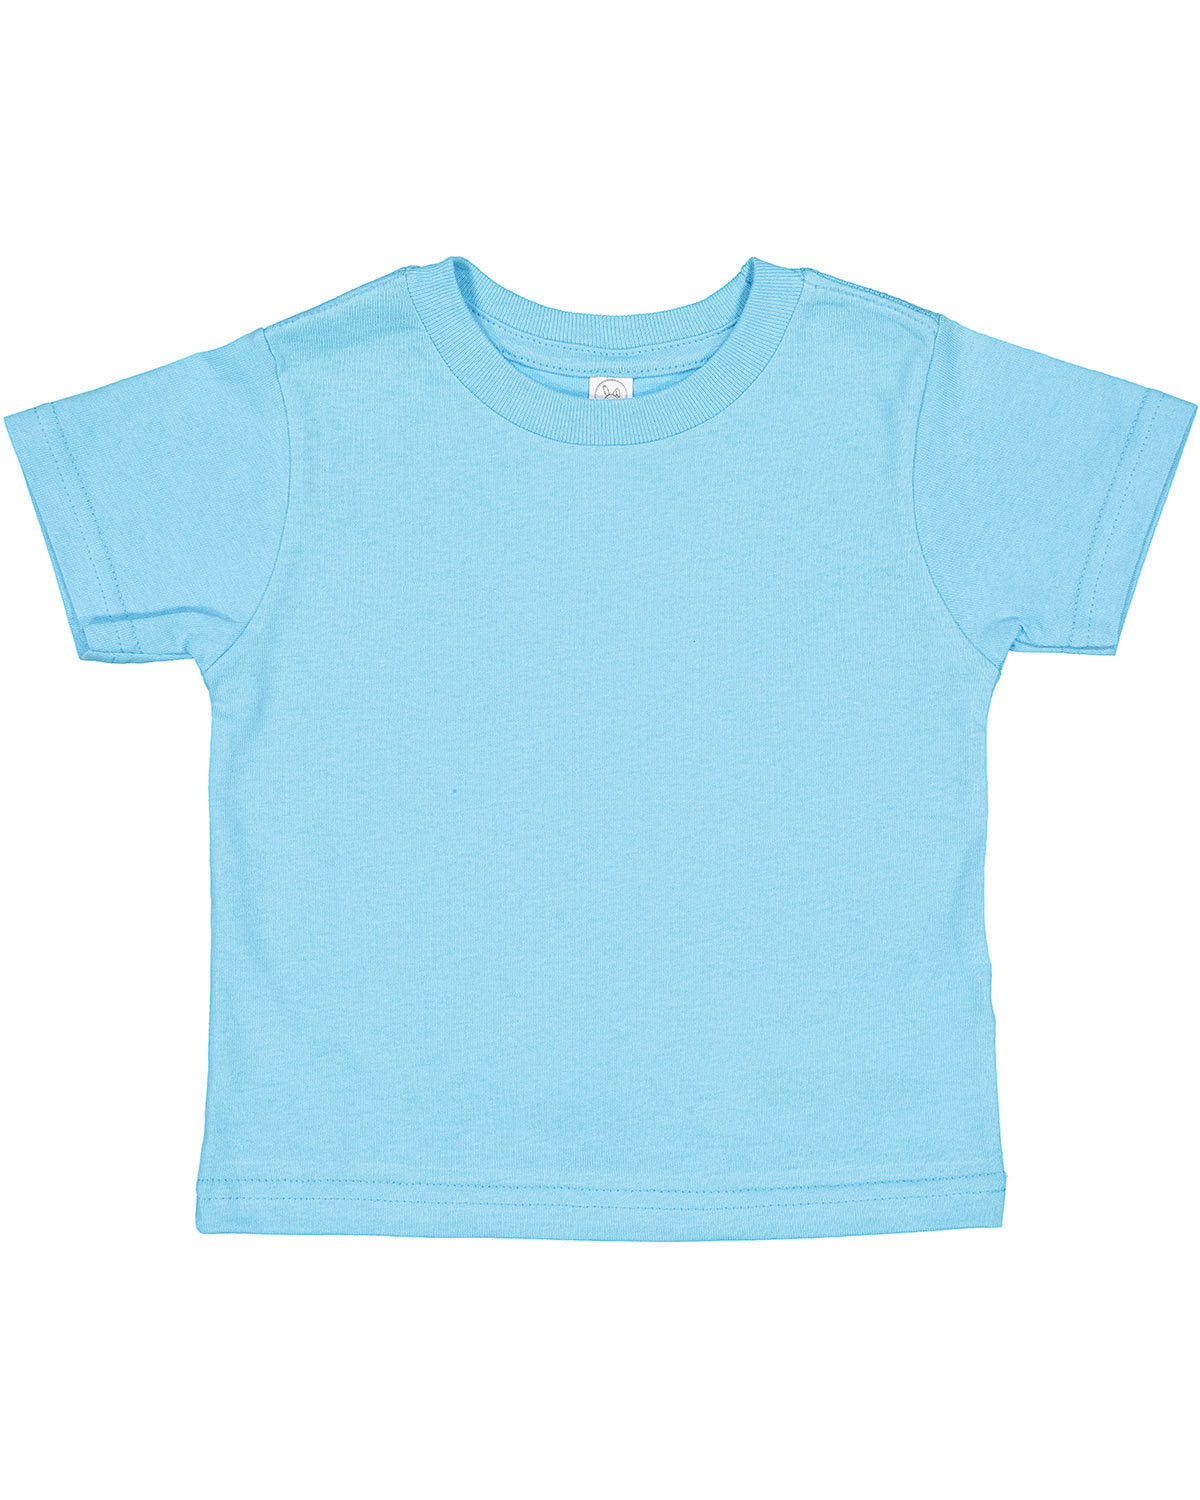 Rabbit Skins Toddler Cotton Jersey T-Shirt 2T / Turquoise